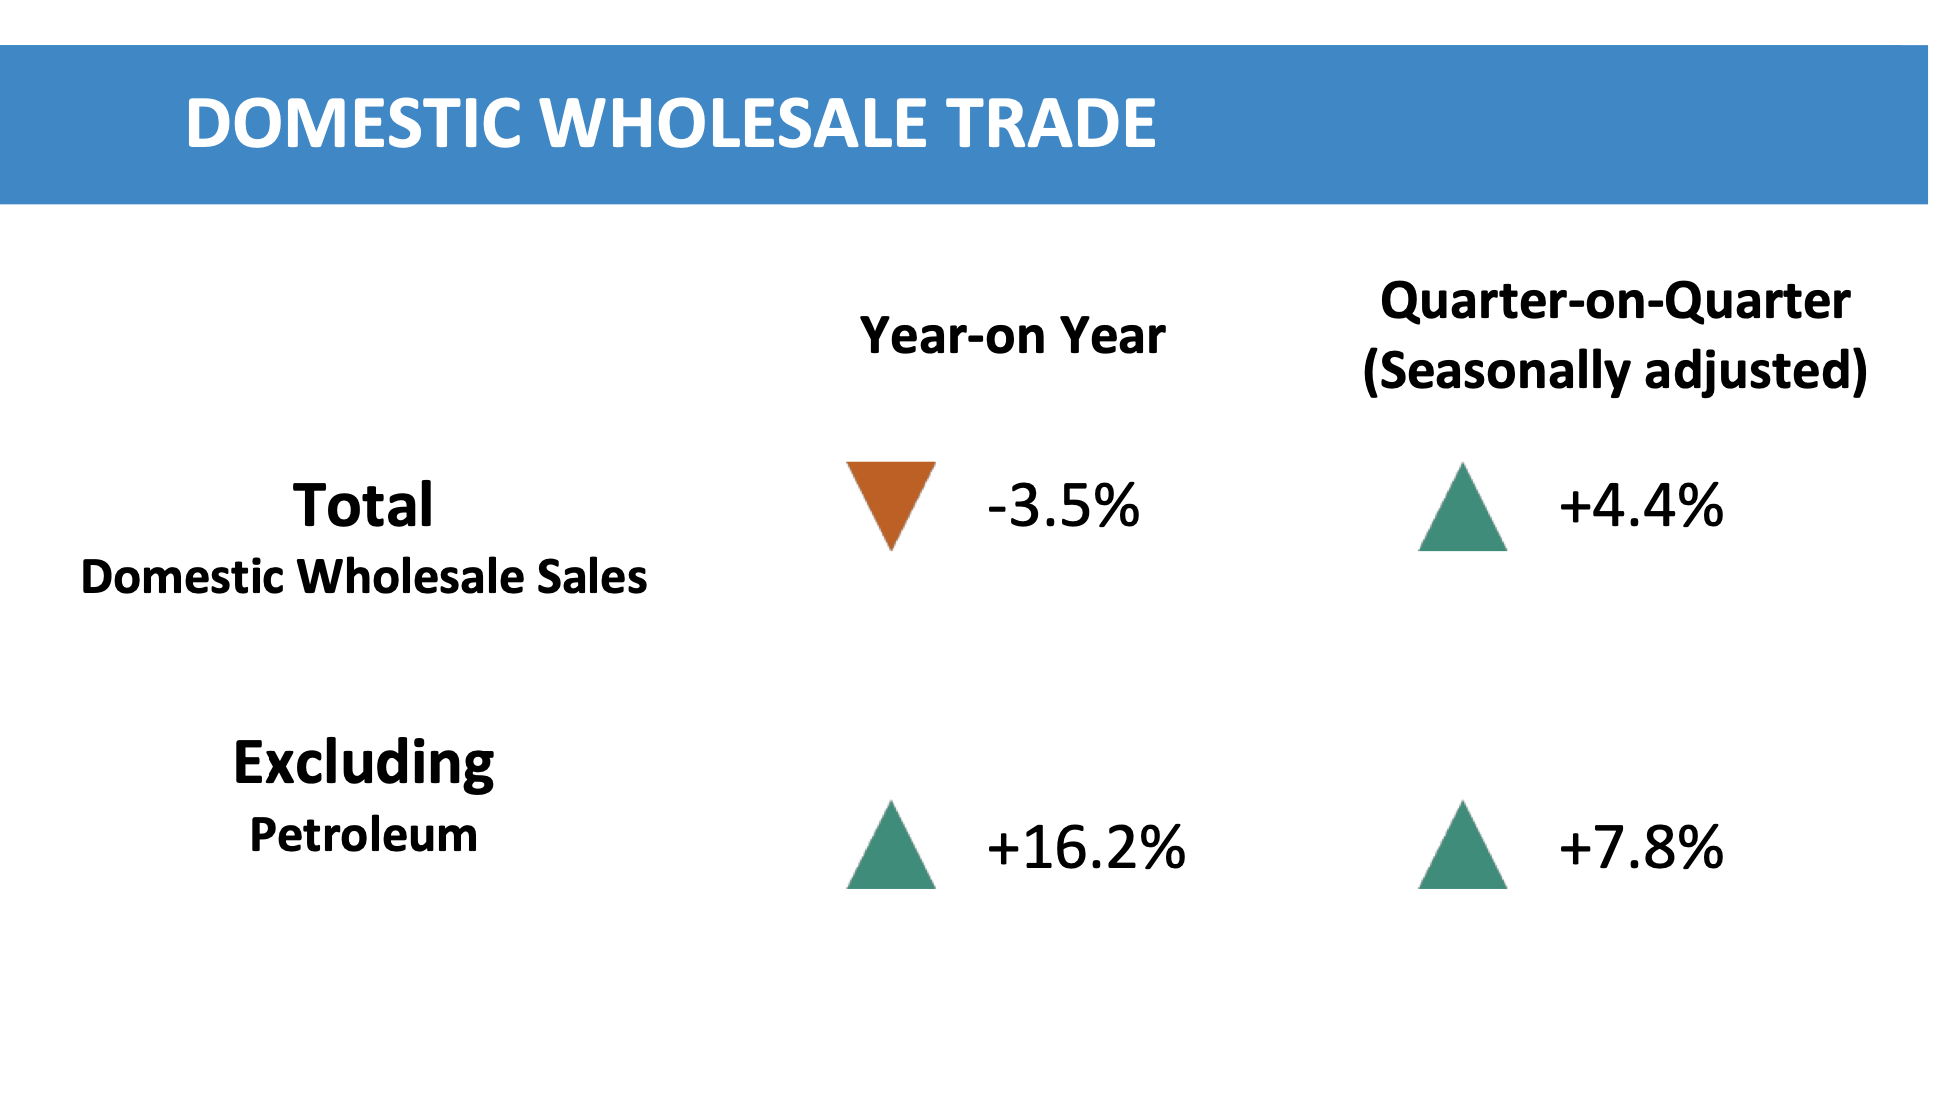 Singapore's Domestic Wholesale Trade